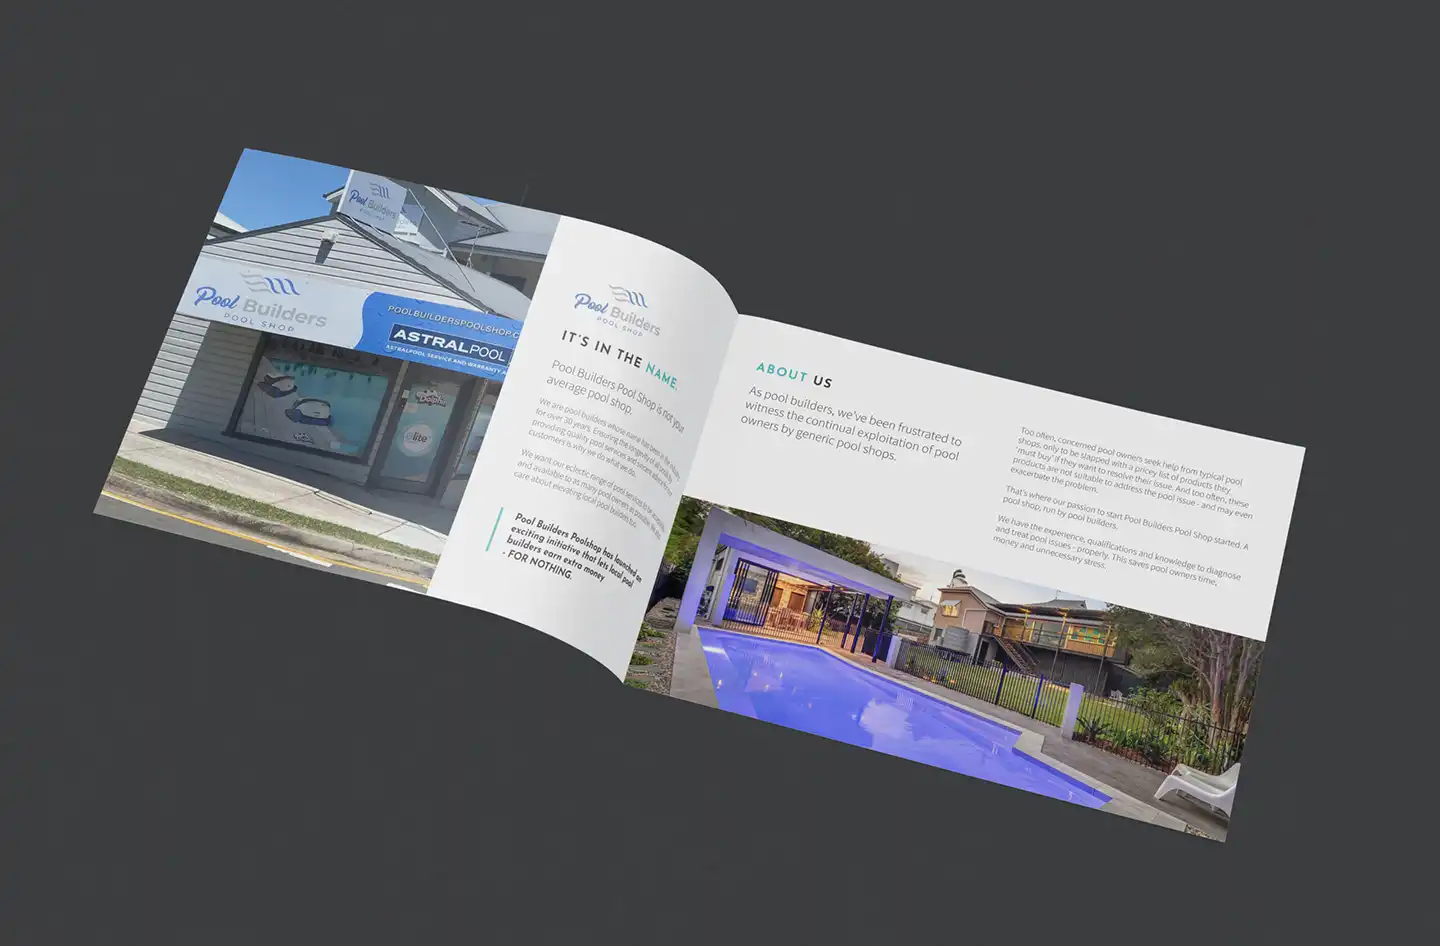 pool-builders-pool-shop-brochure-print-graphic-design-ronin-brisbane